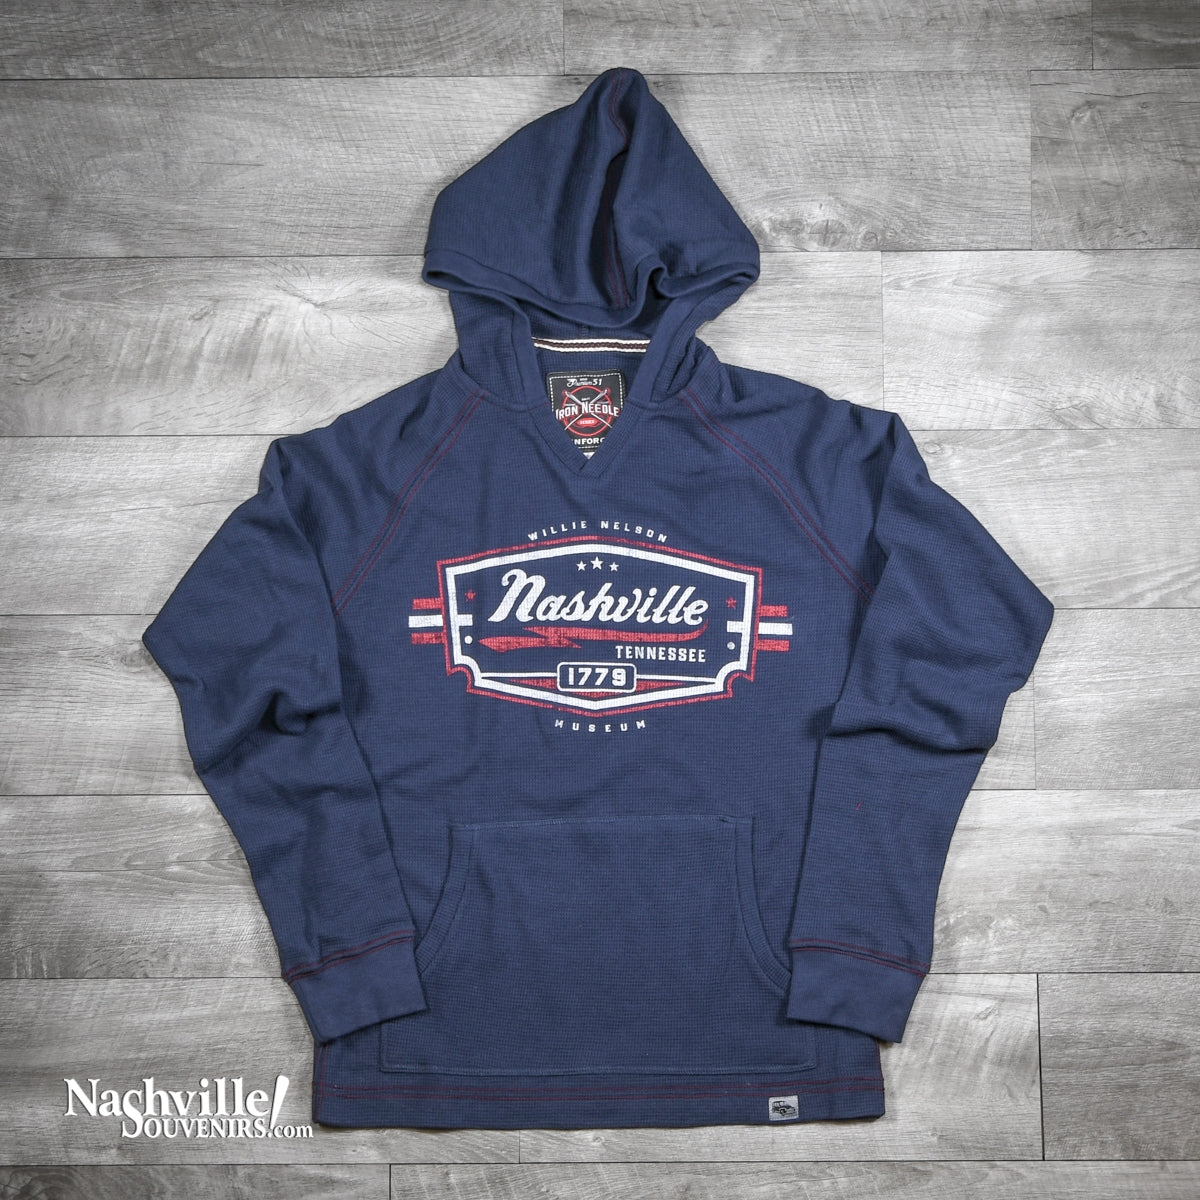 Nashville "Premium 51 Brand" Iron Needle Hoodie